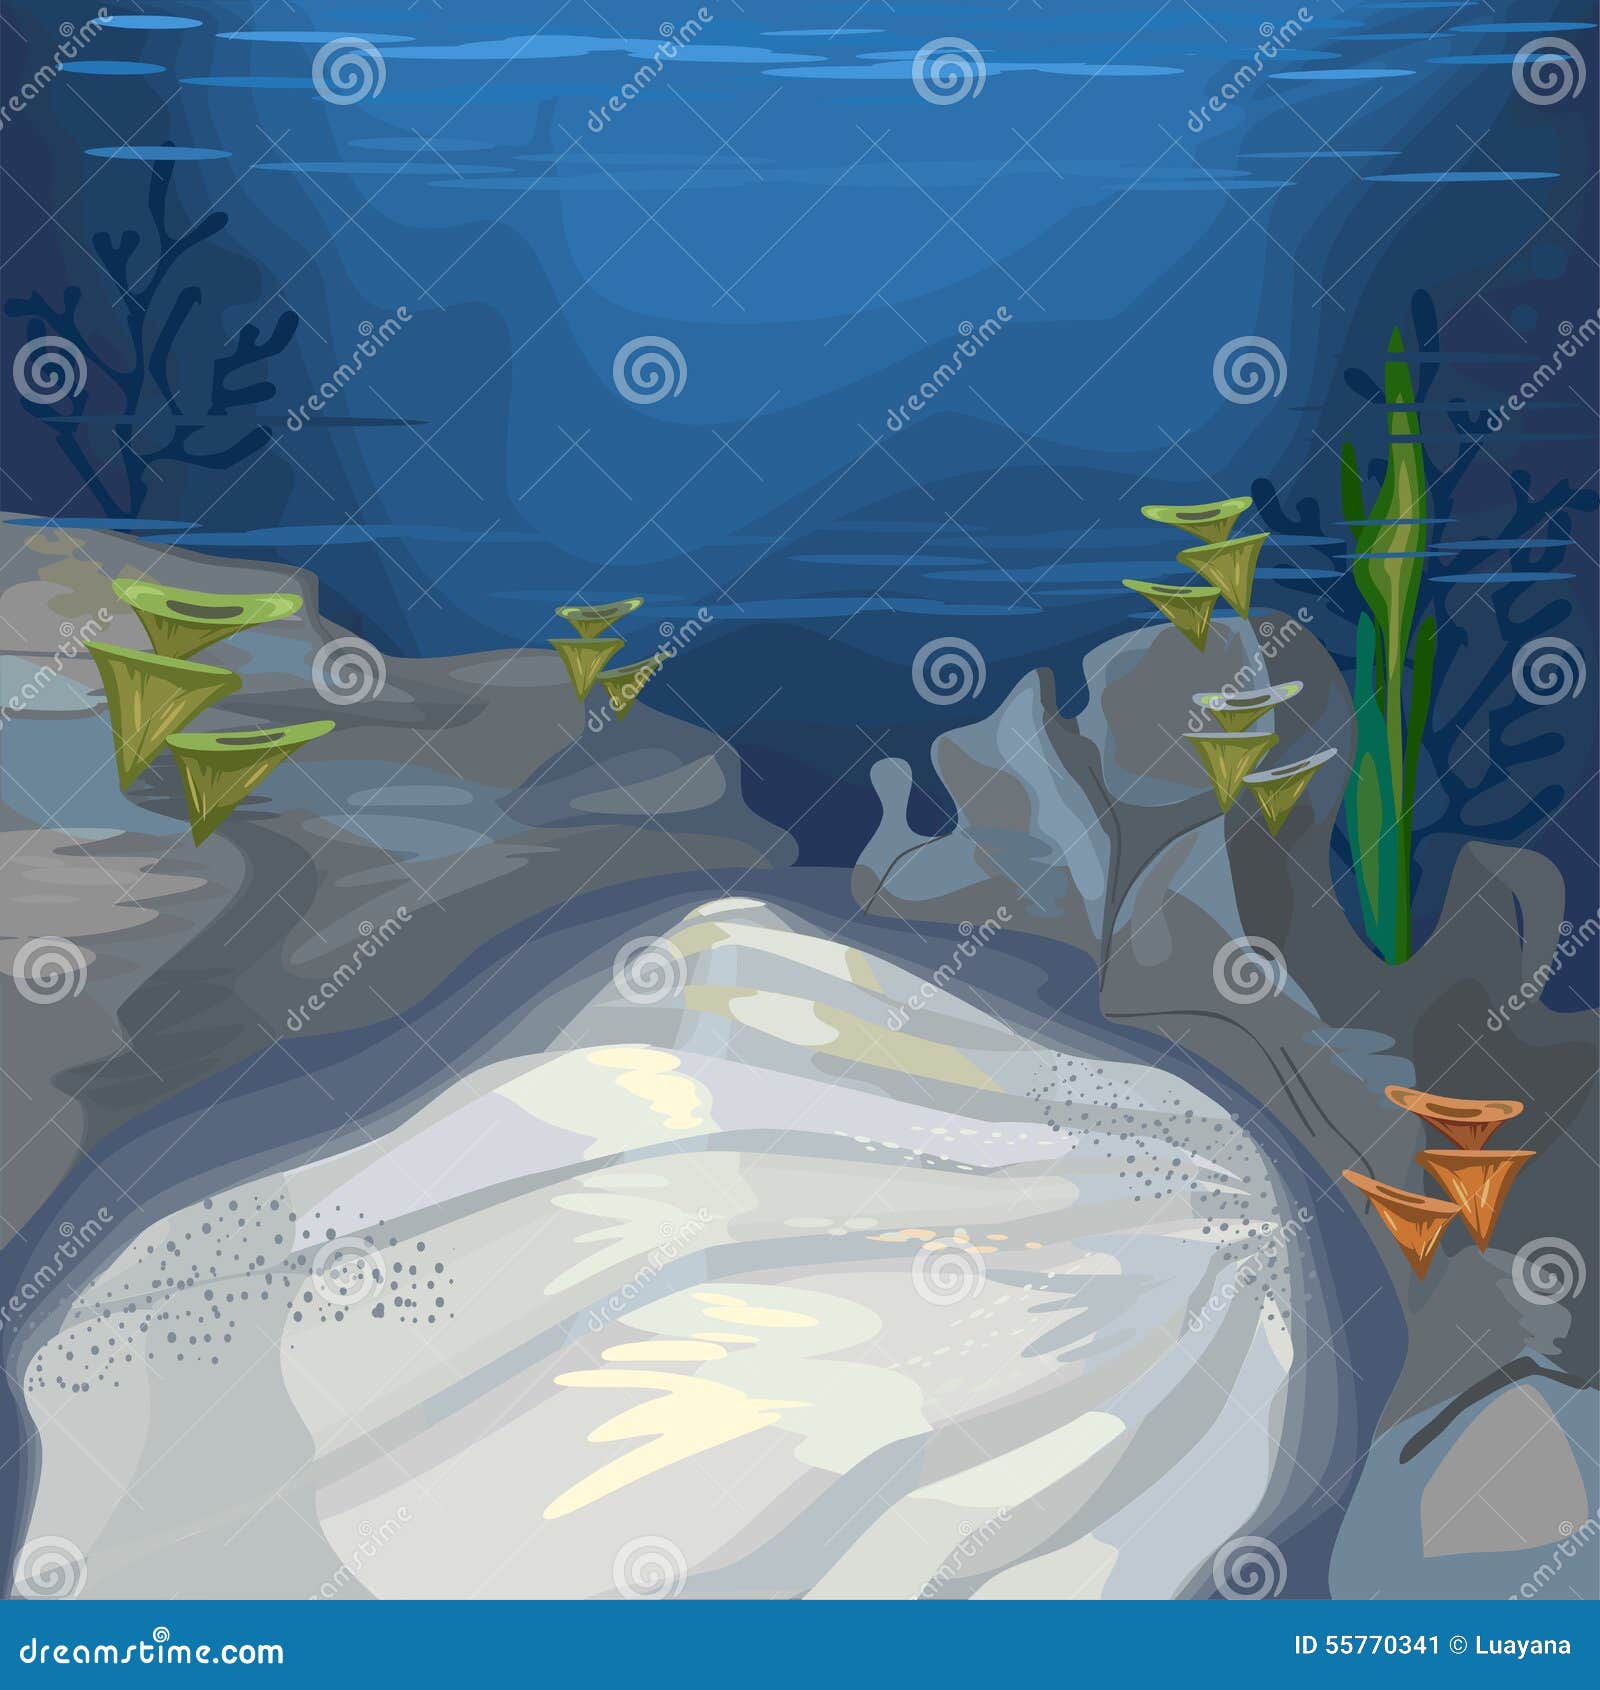 Underwater World stock vector. Illustration of environment - 55770341